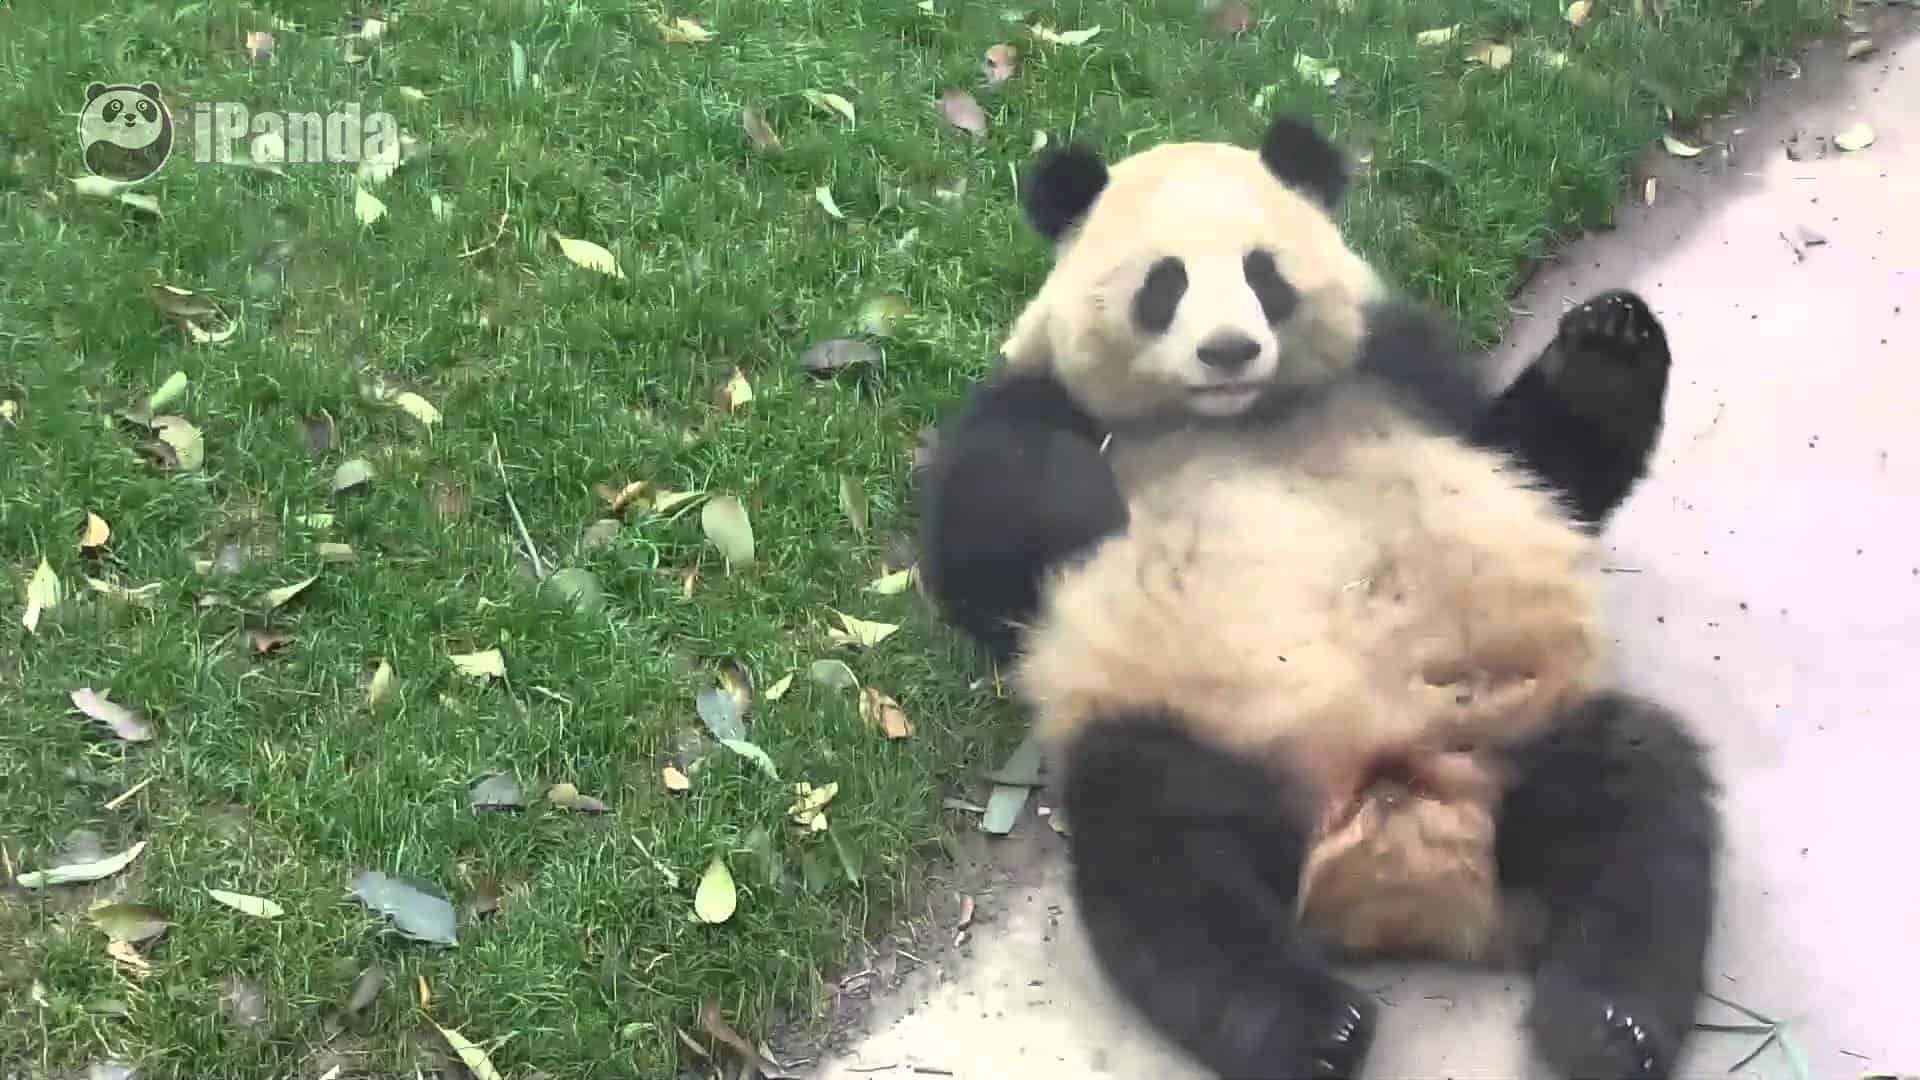 Panda does somersaults